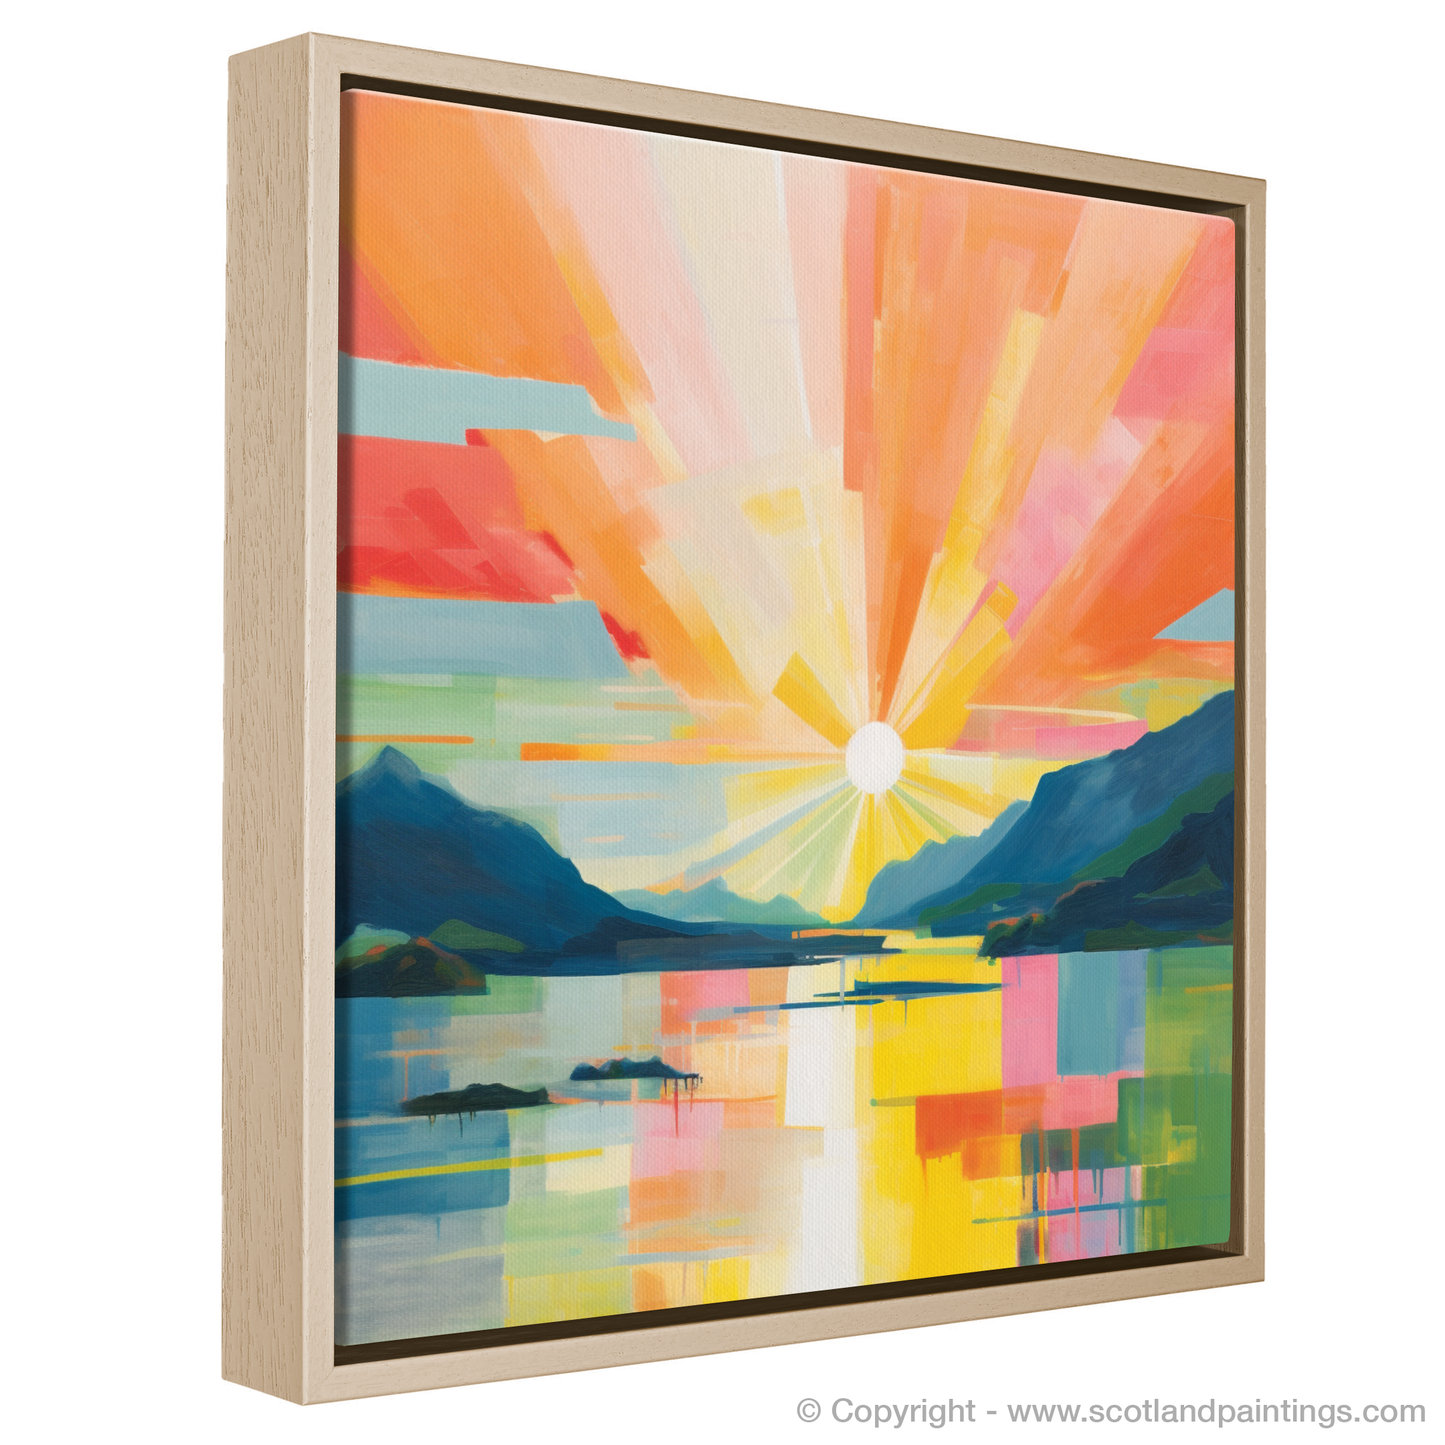 Painting and Art Print of Sunbeams on Loch Lomond entitled "Sunrise Embrace at Loch Lomond".